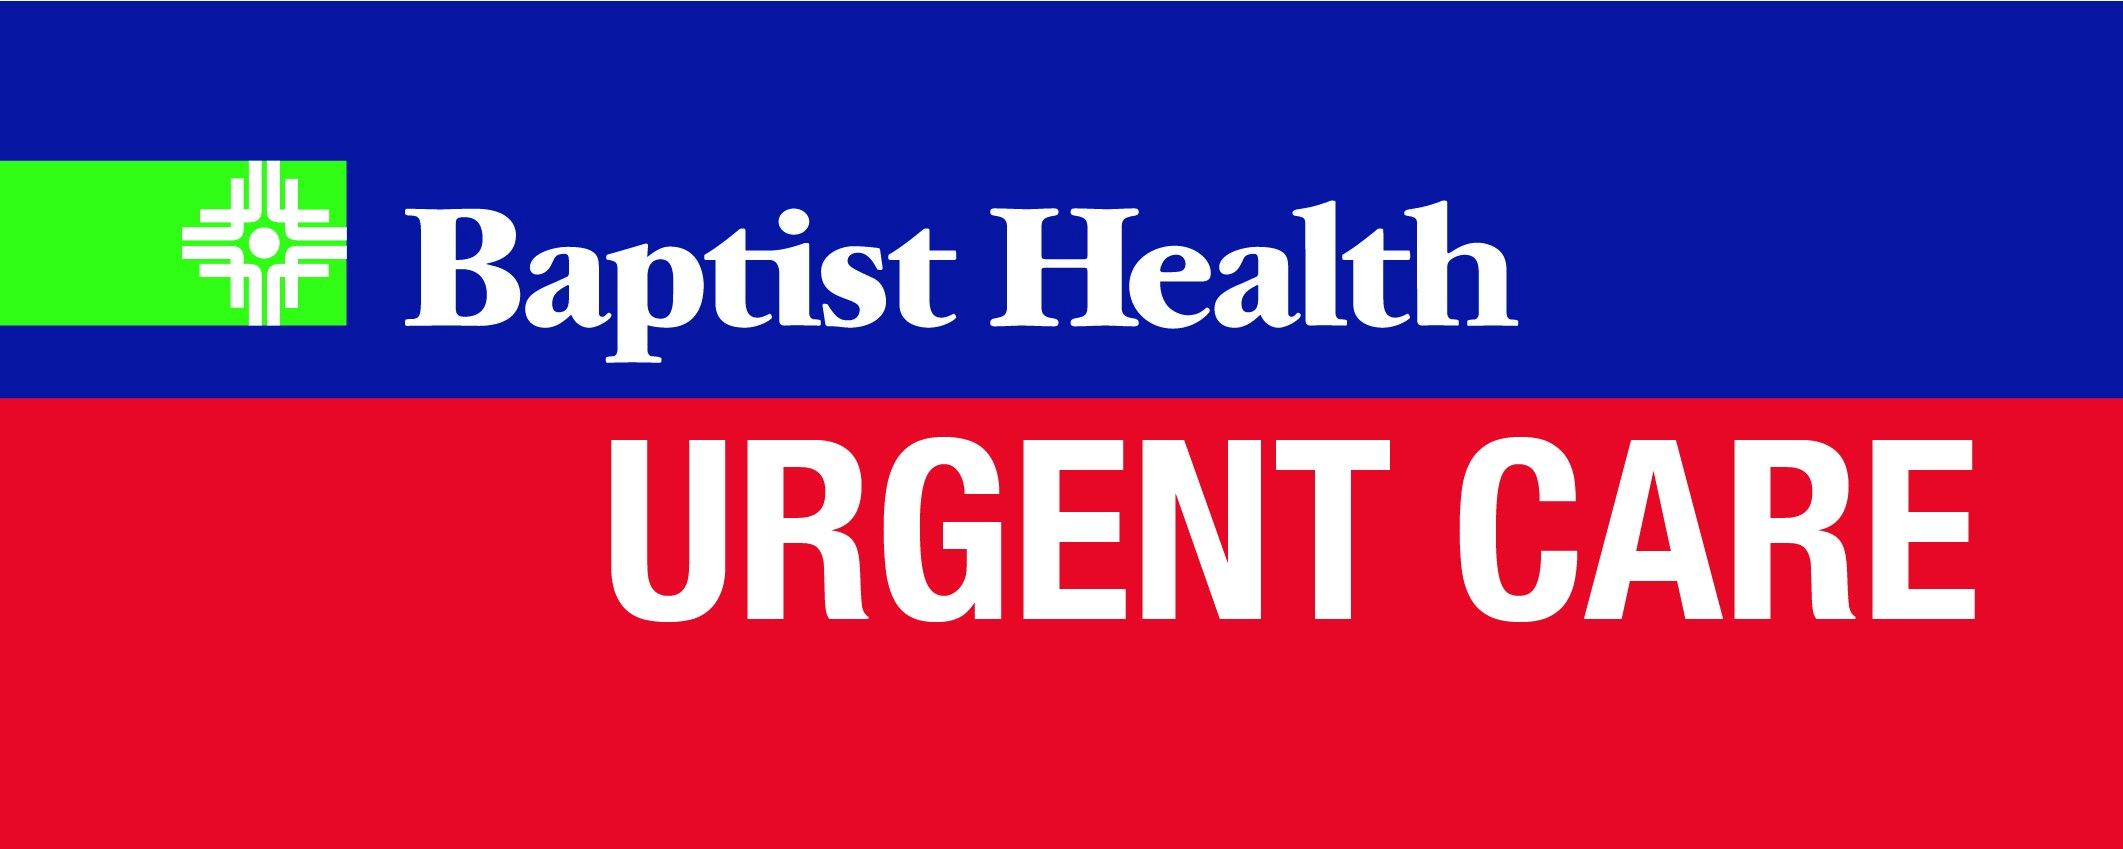 Baptist Health Urgent Care - Jacksonville Logo